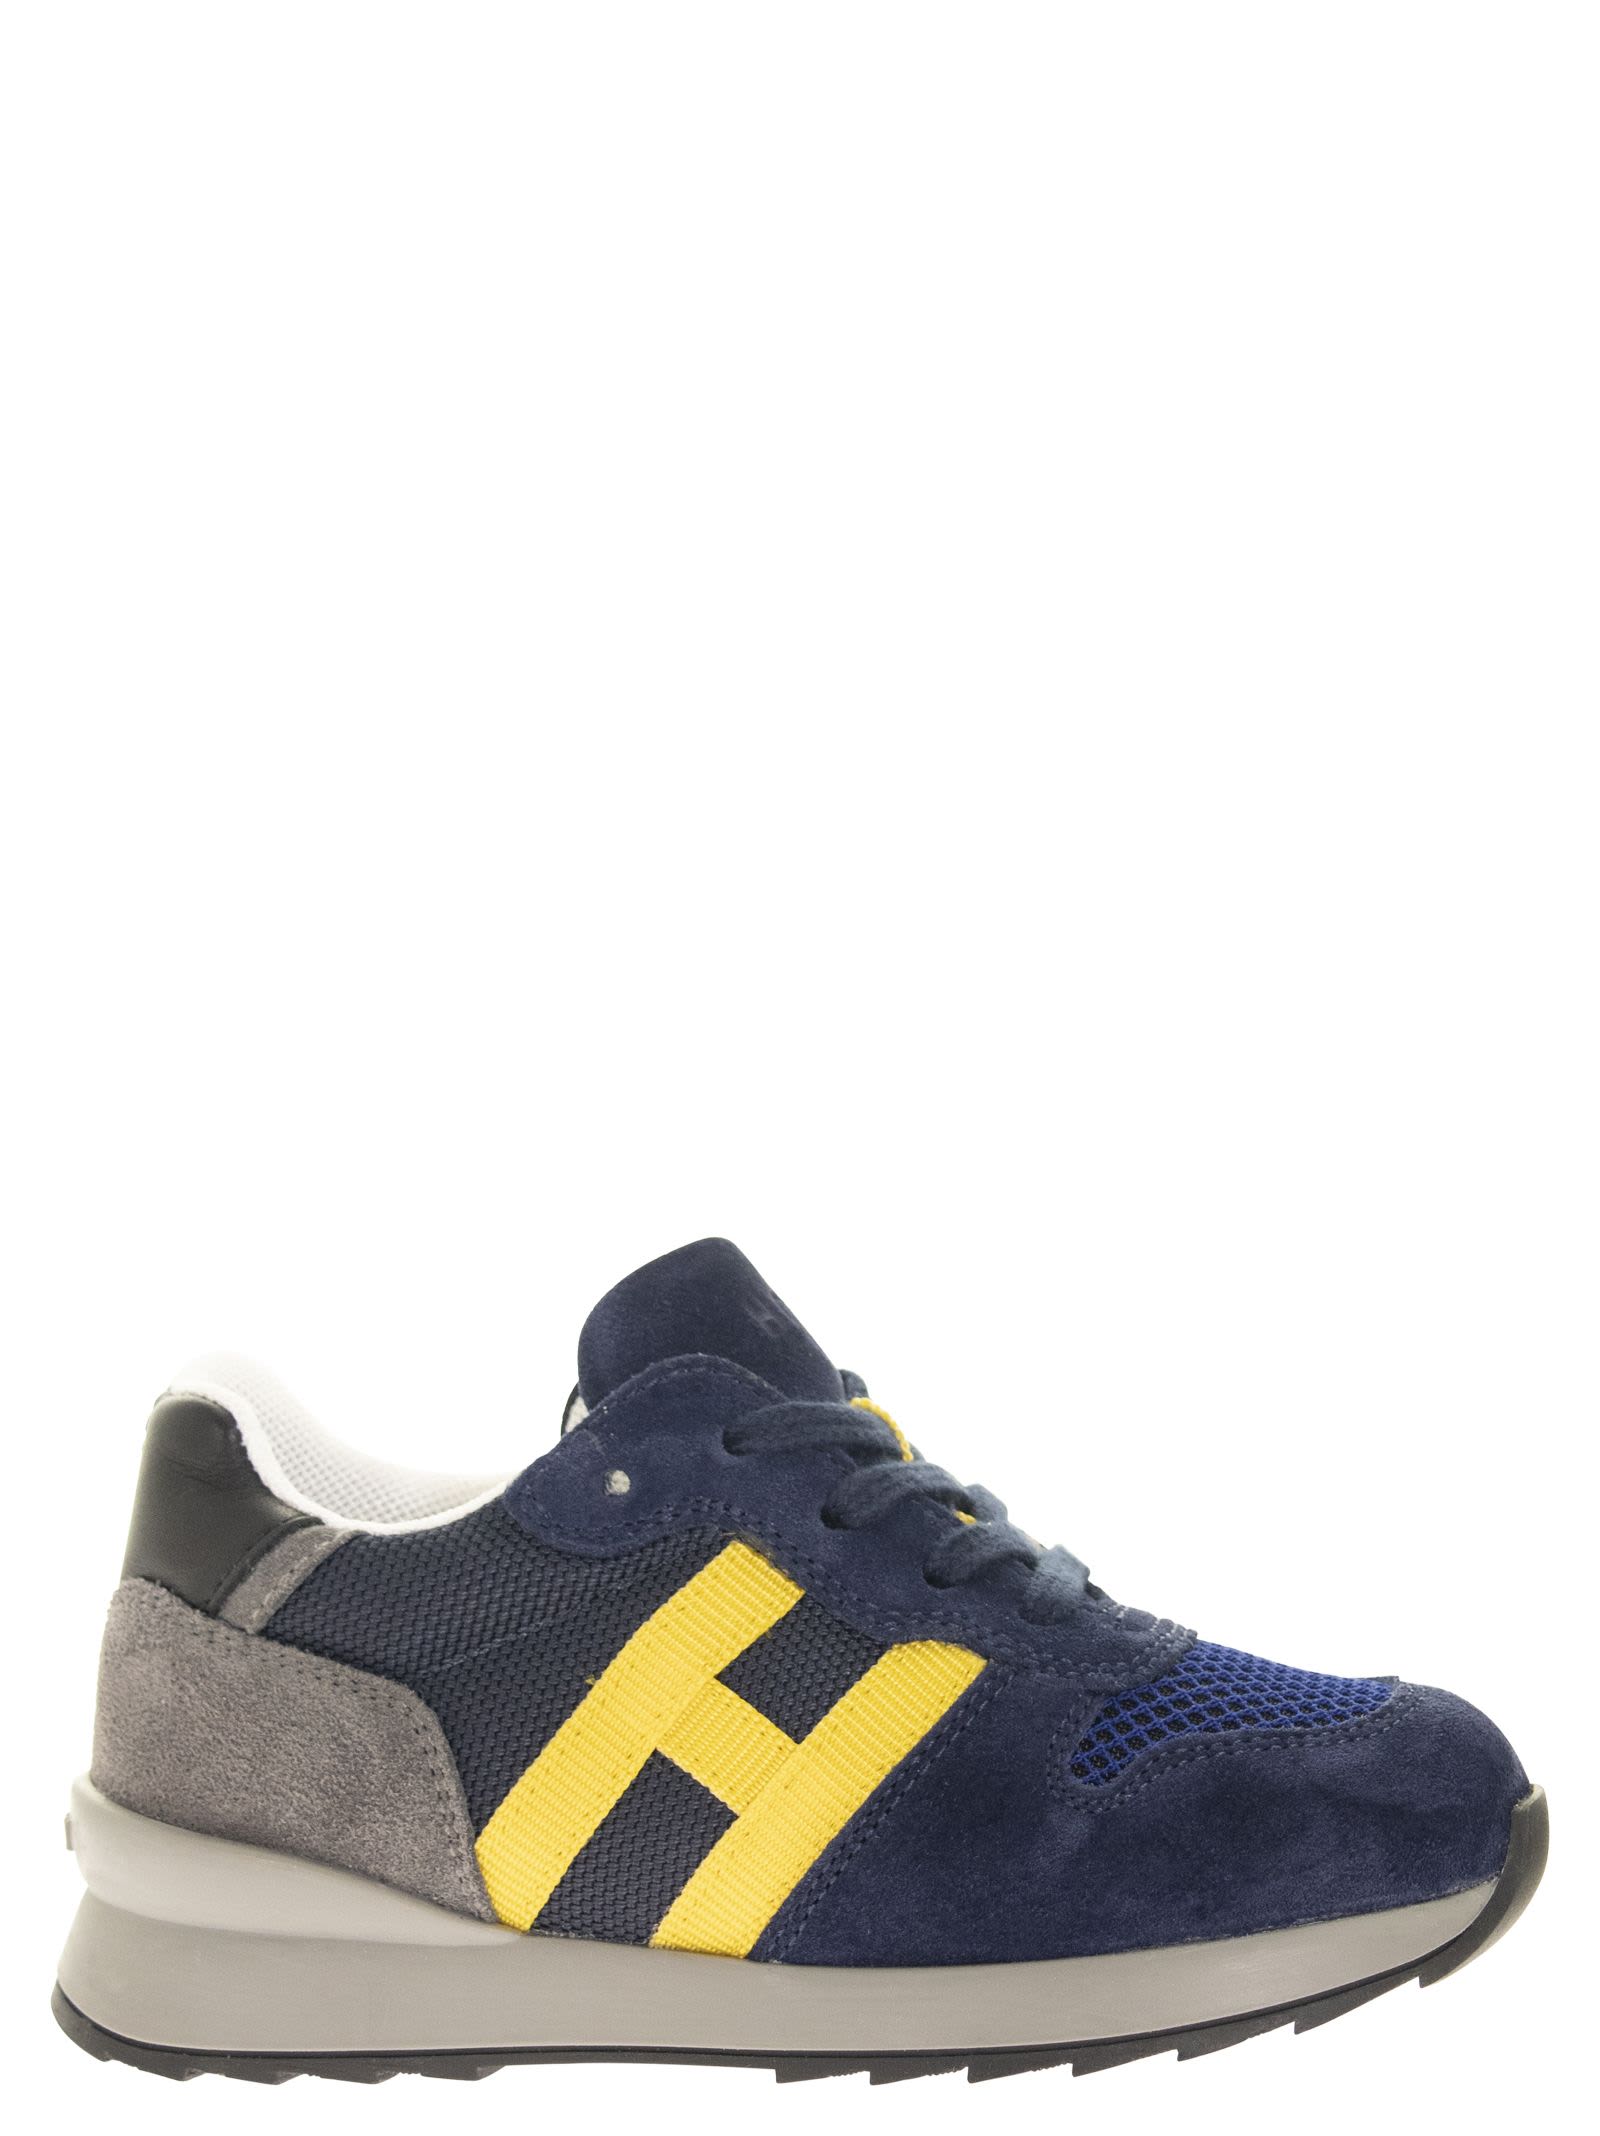 Hogan J484 - Sneakers